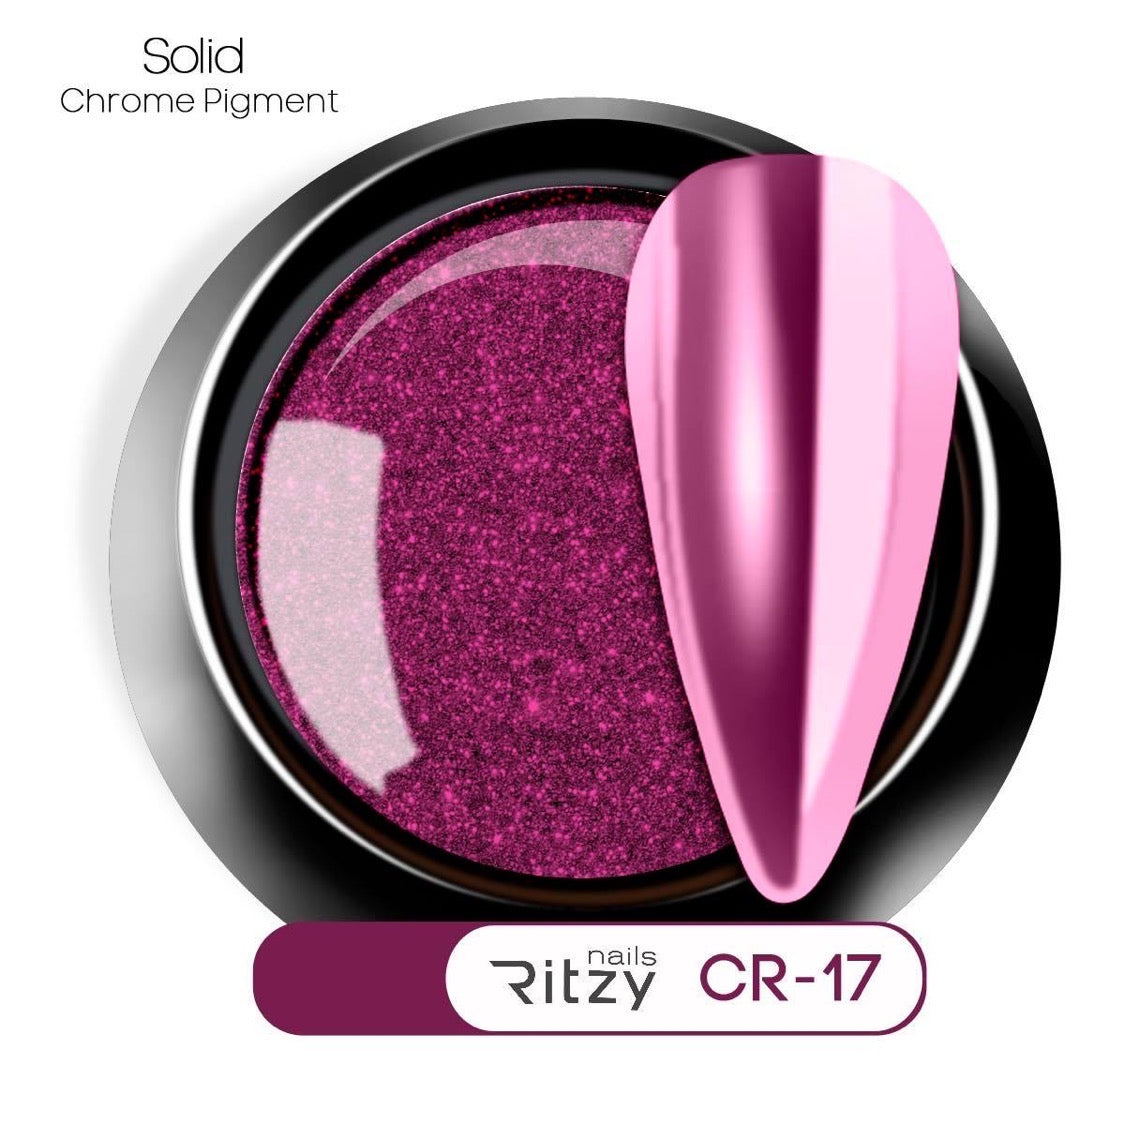 Chrome pigment CR-17